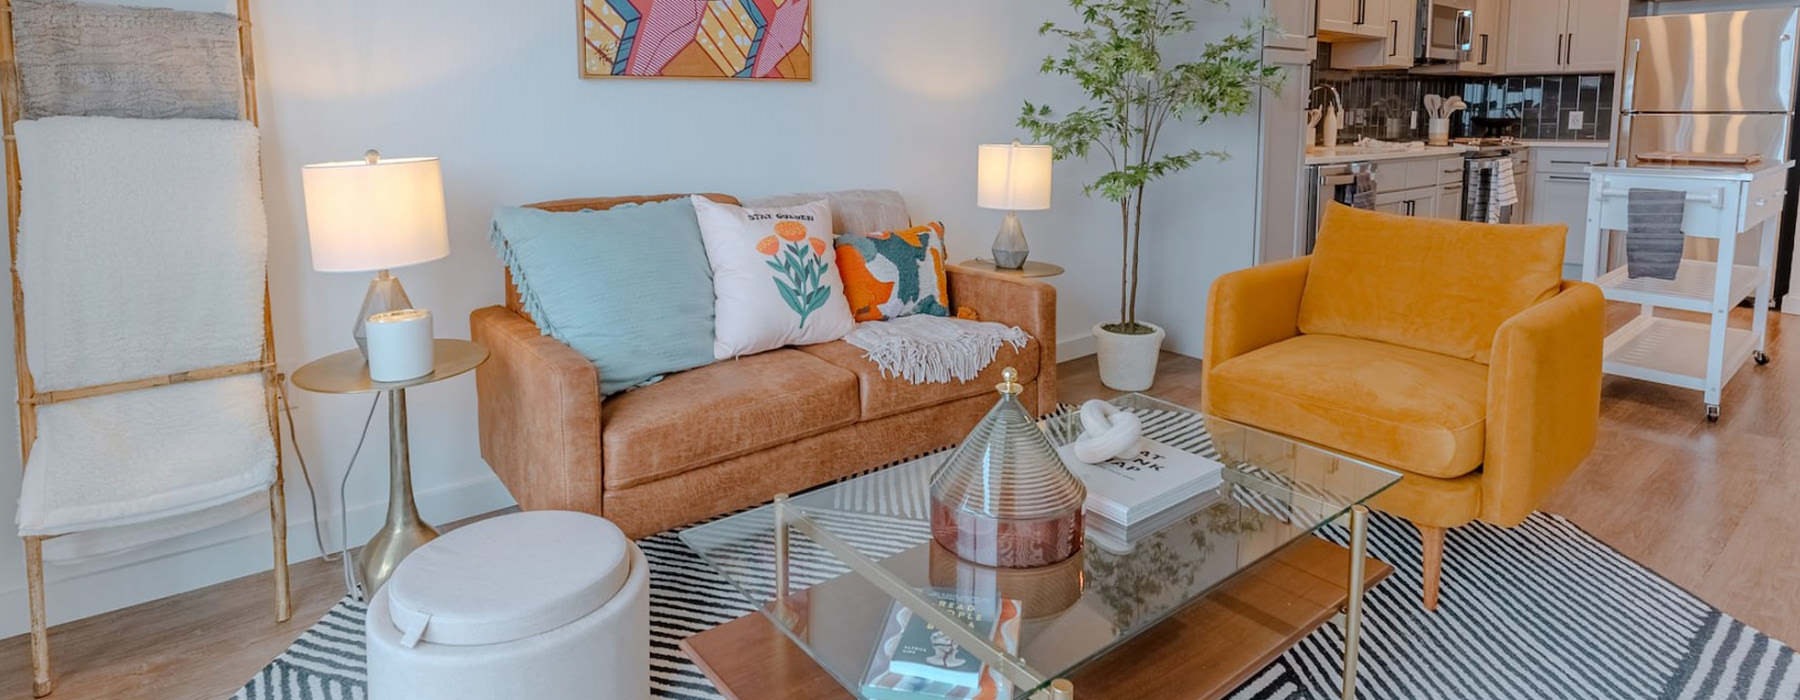 bright, open concept living room